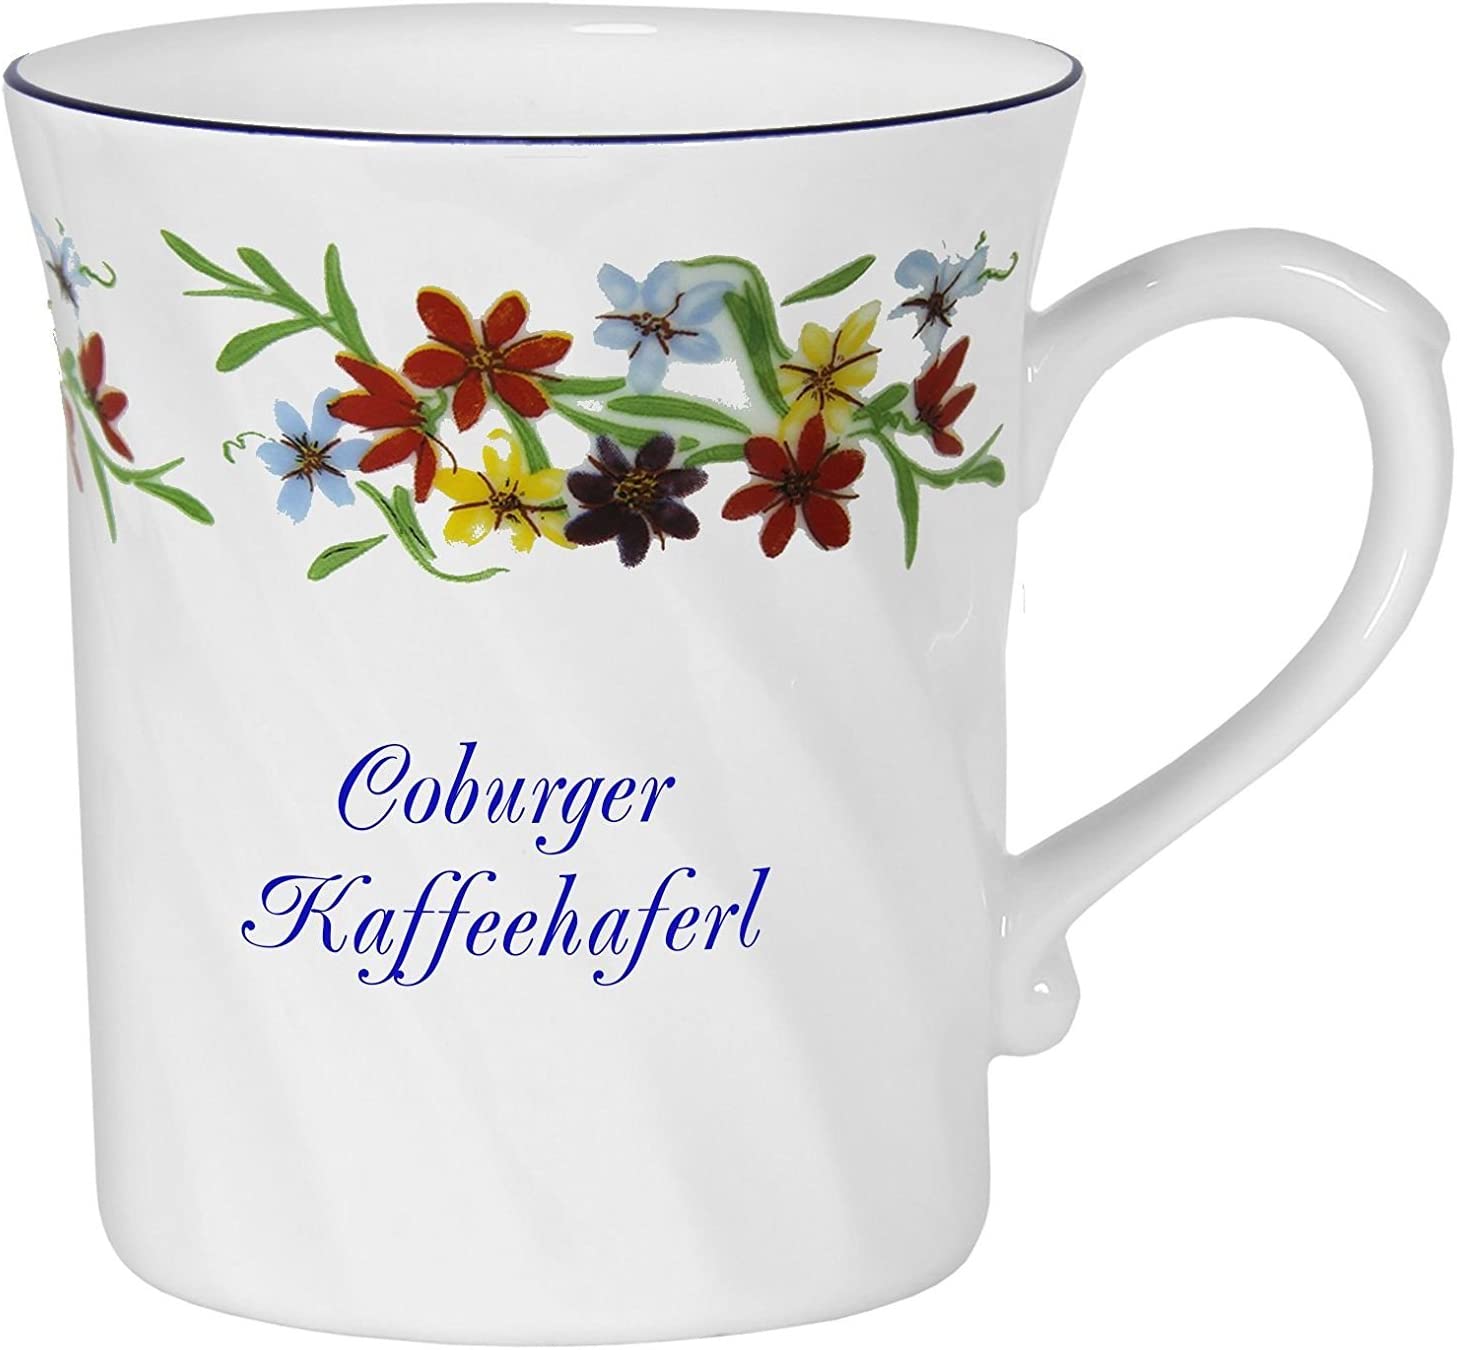 Porzellan gedreht- Tasse, Kaffeepott, Becher - Coburg- Blumenranke